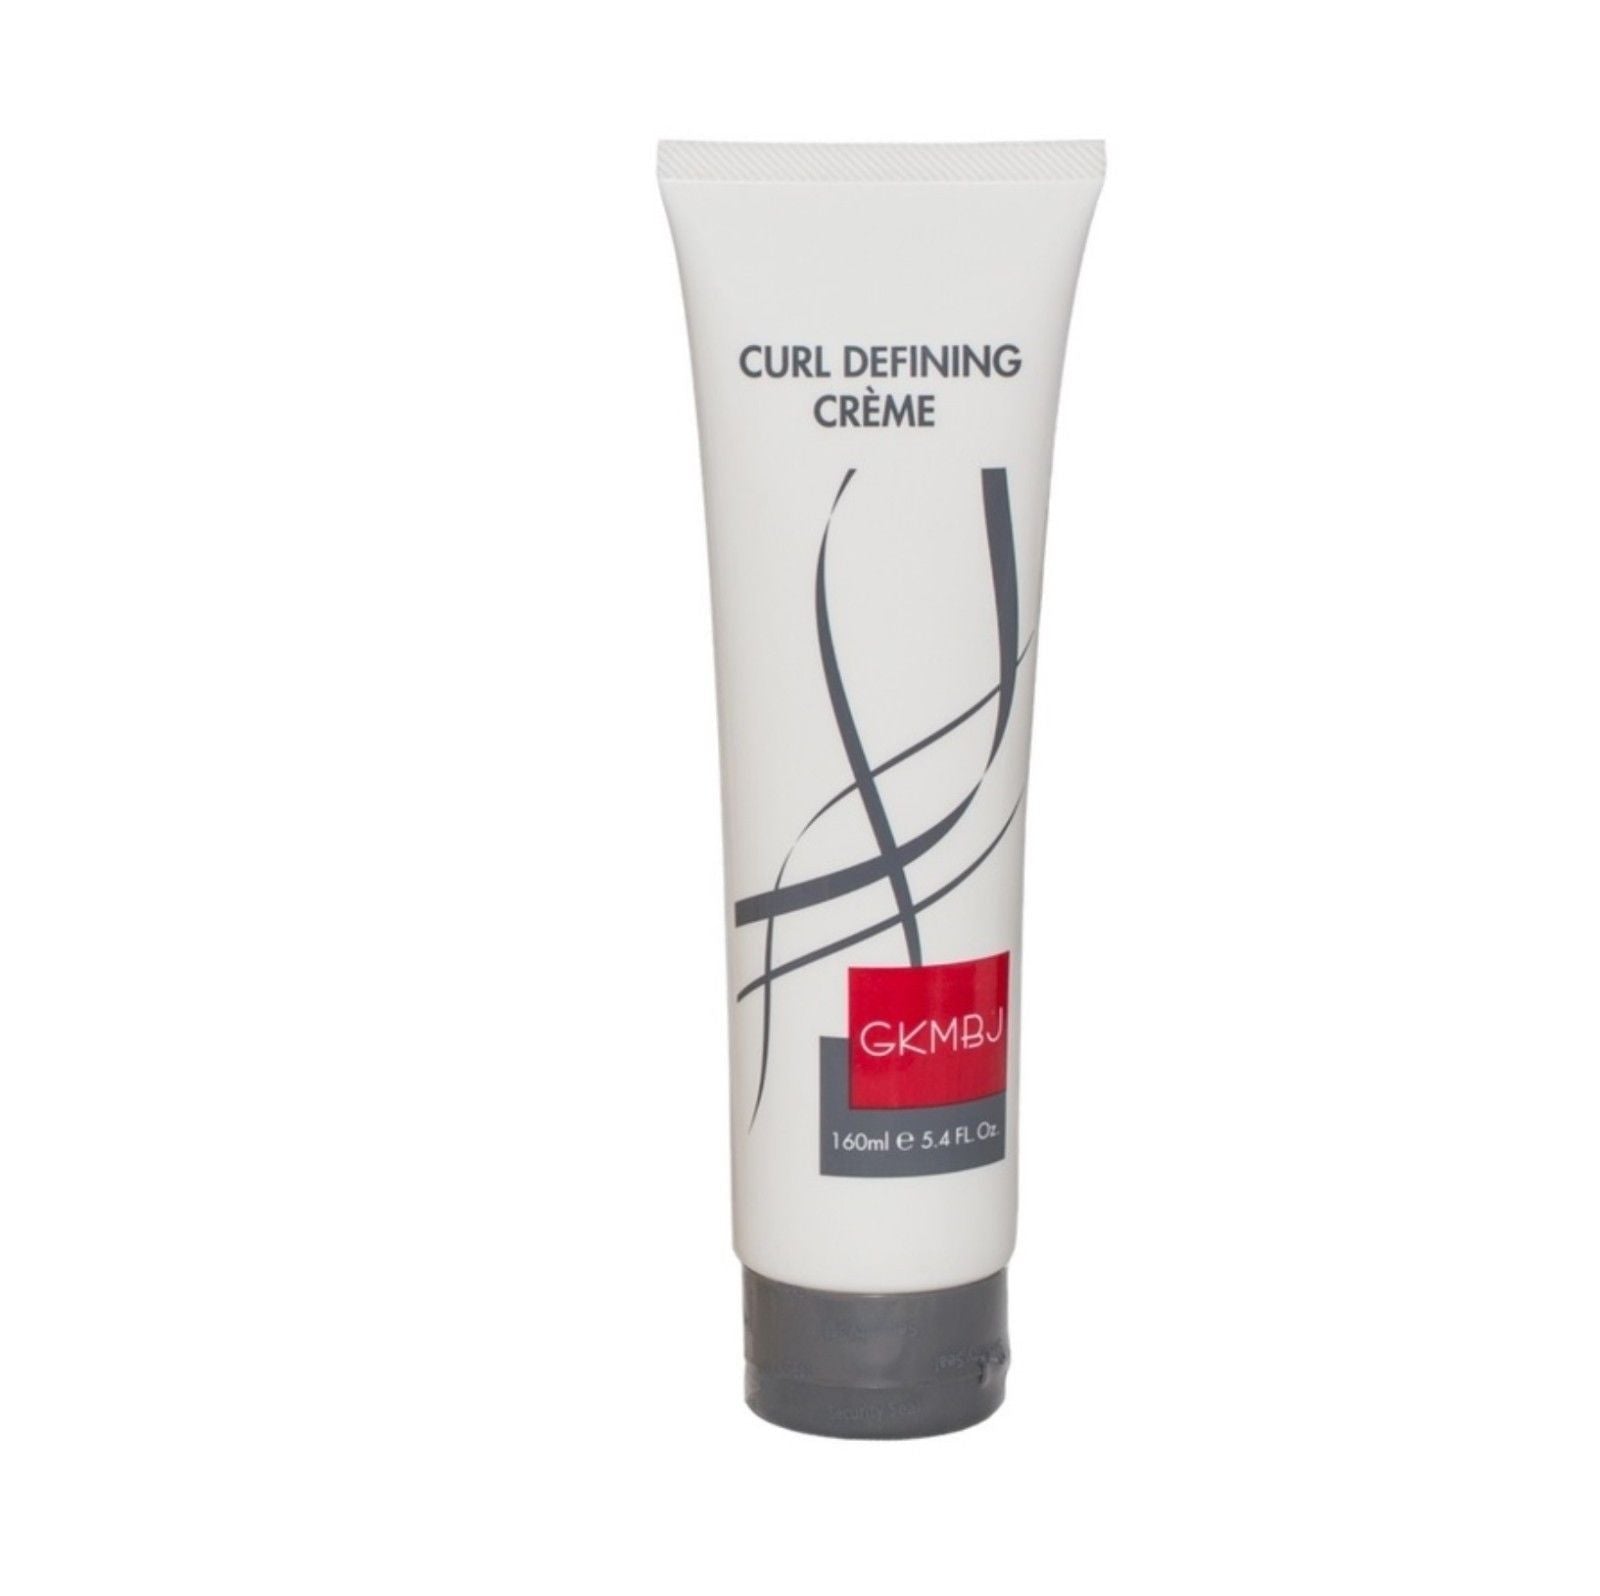 GKMBJ Curl Defining Creme 160g Deep Penetration - Enhance Curls - On Line Hair Depot